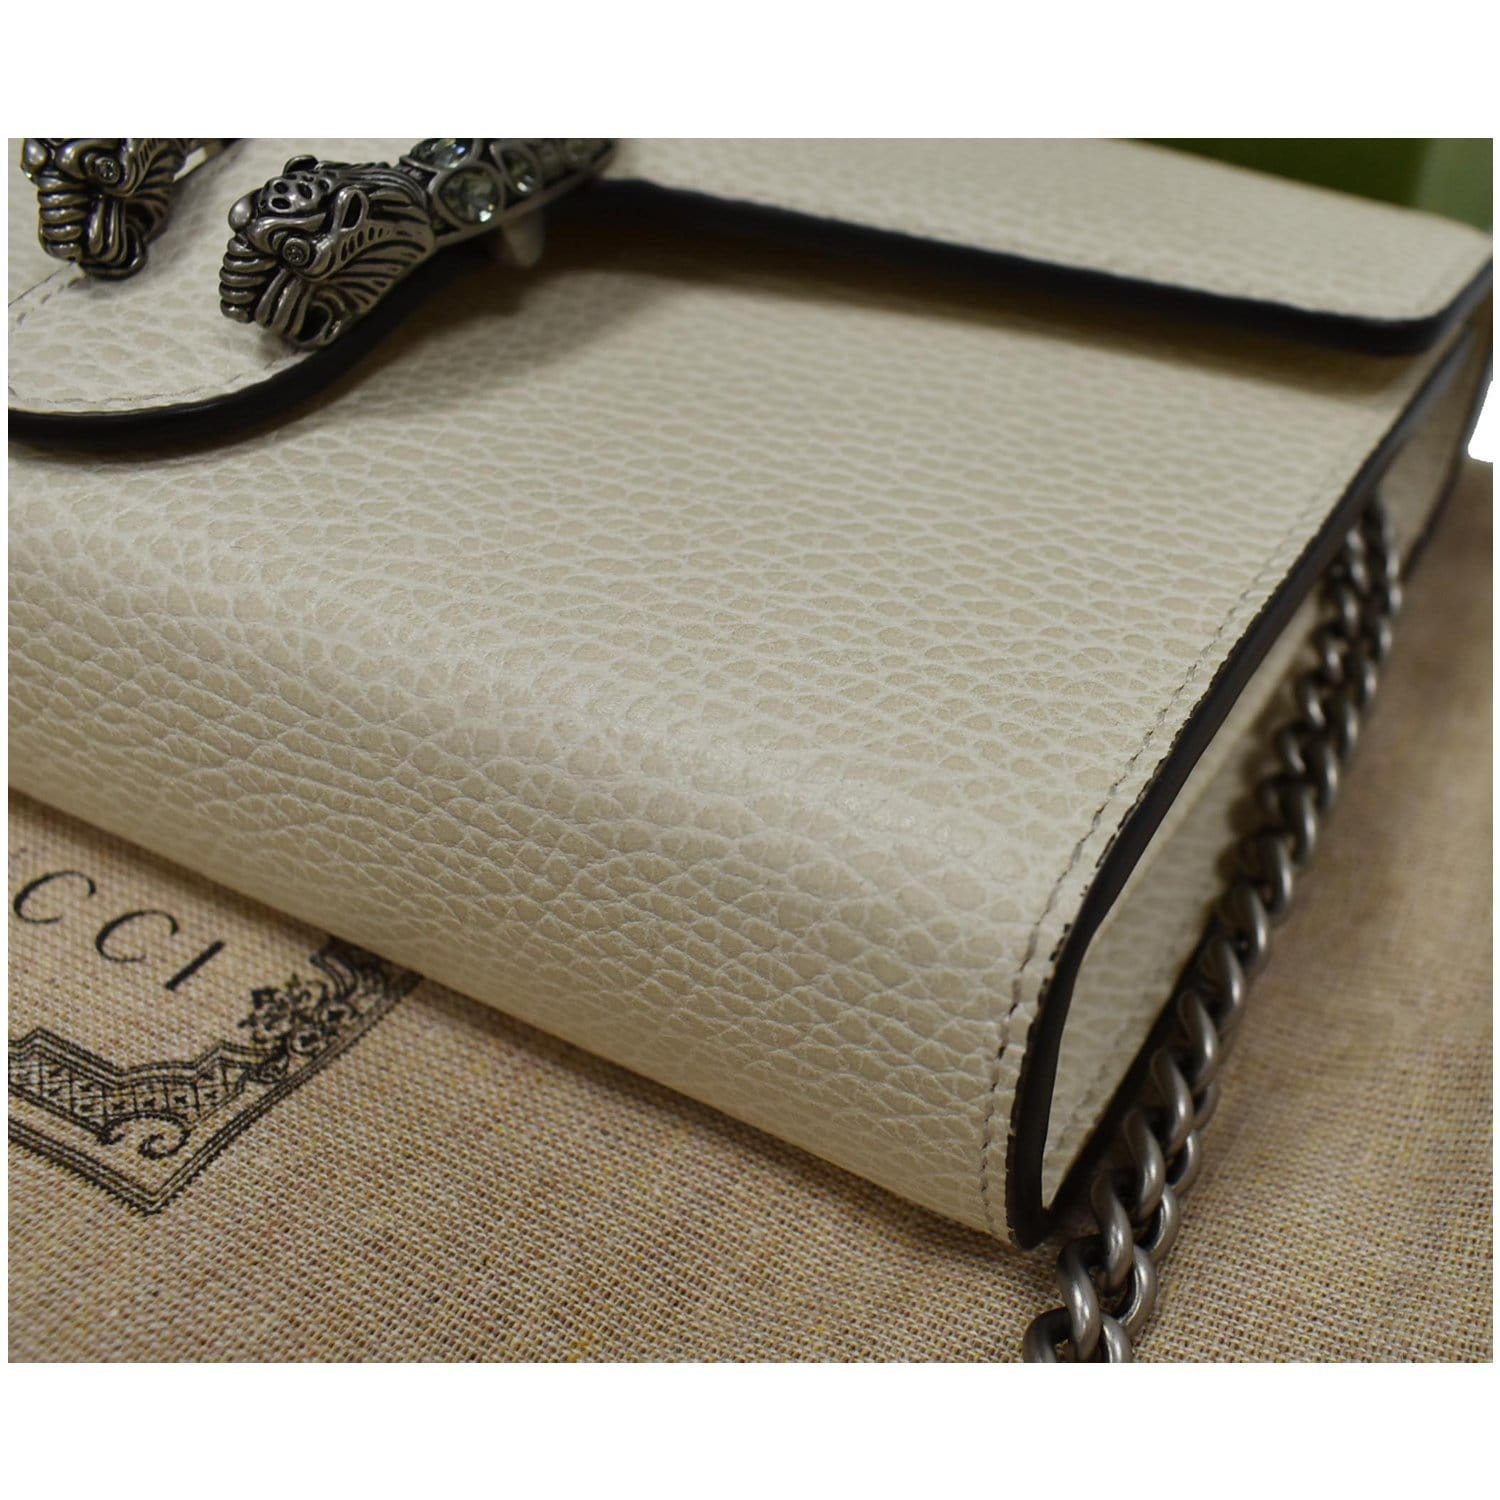 GUCCI Dionysus Mini Leather Chain Shoulder Bag Off White 401231 - 20%